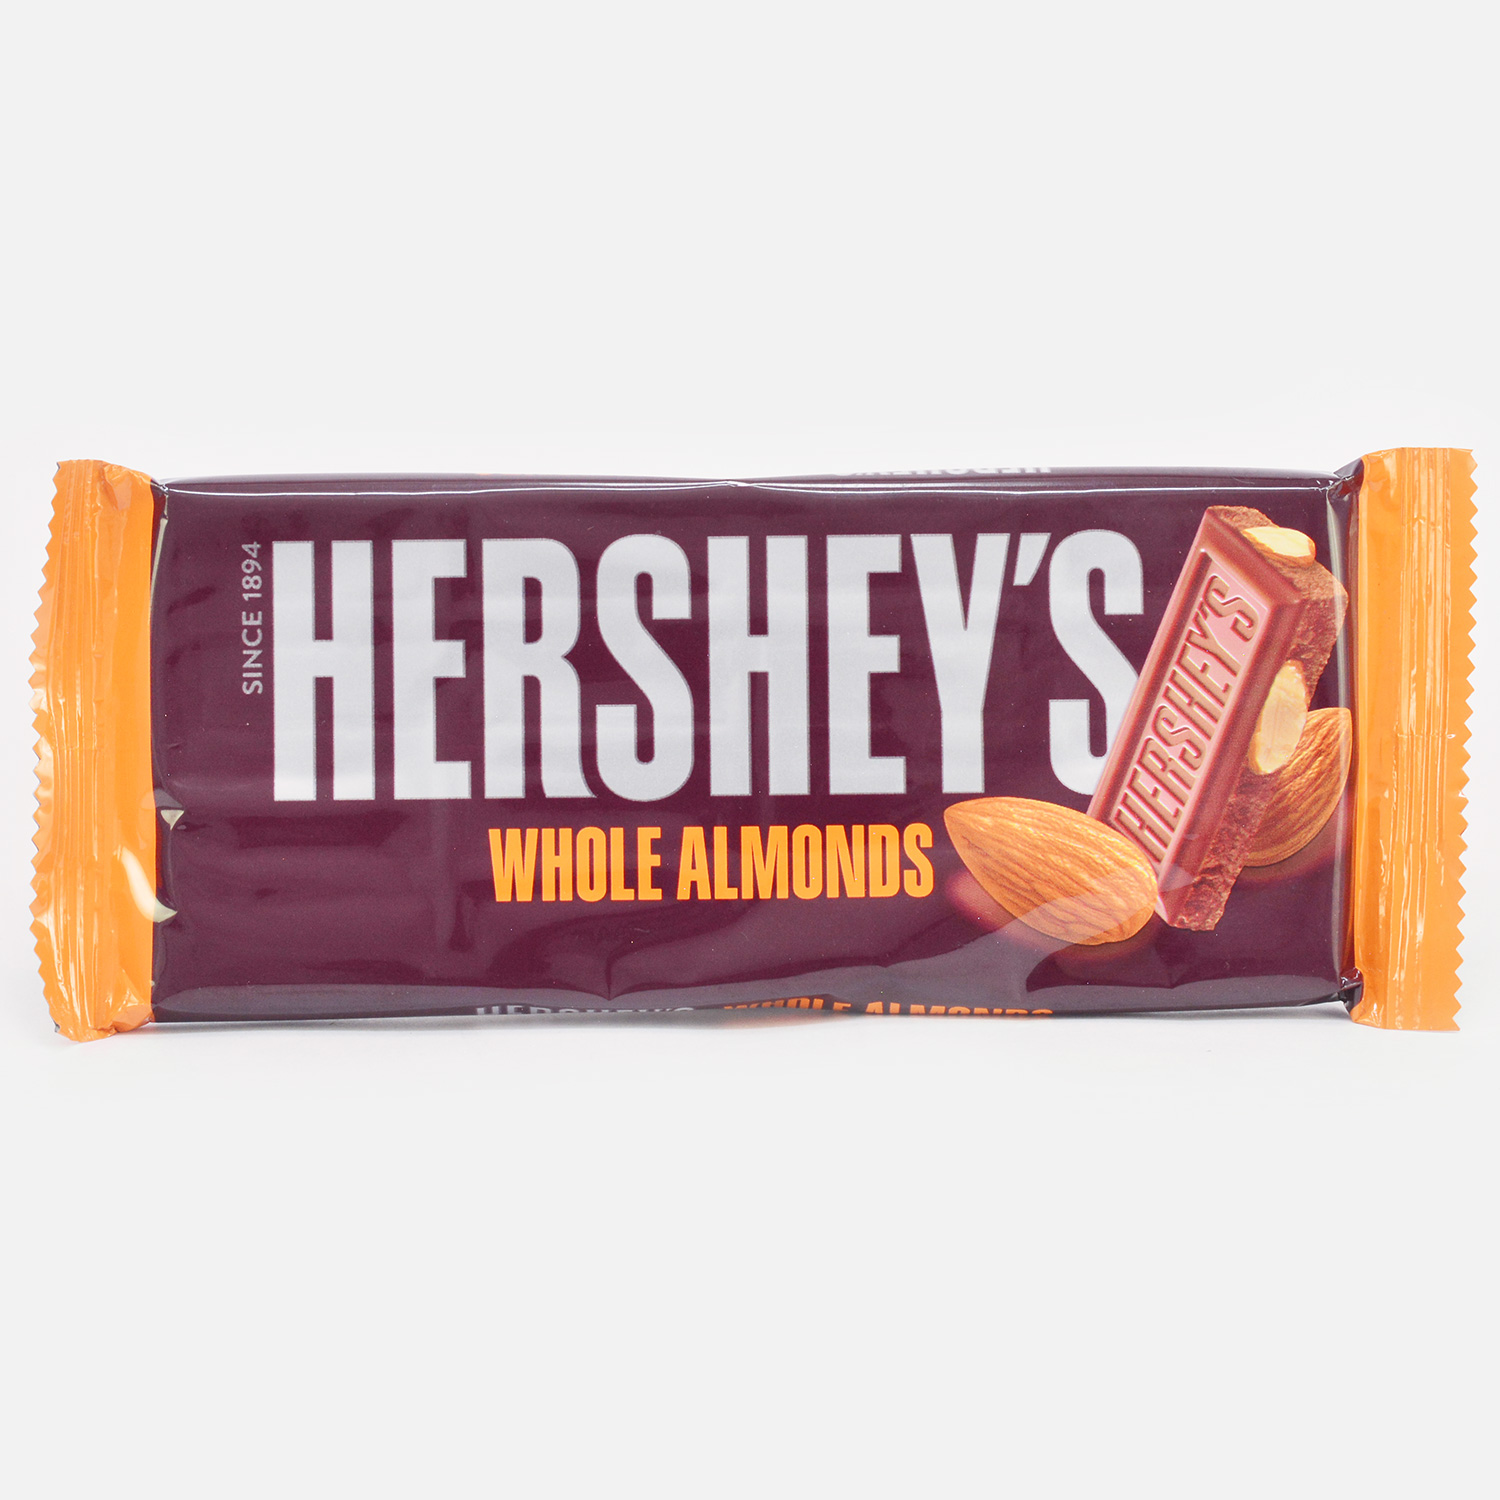 Hersheys Whole Almonds Tasty Branded Chocolate